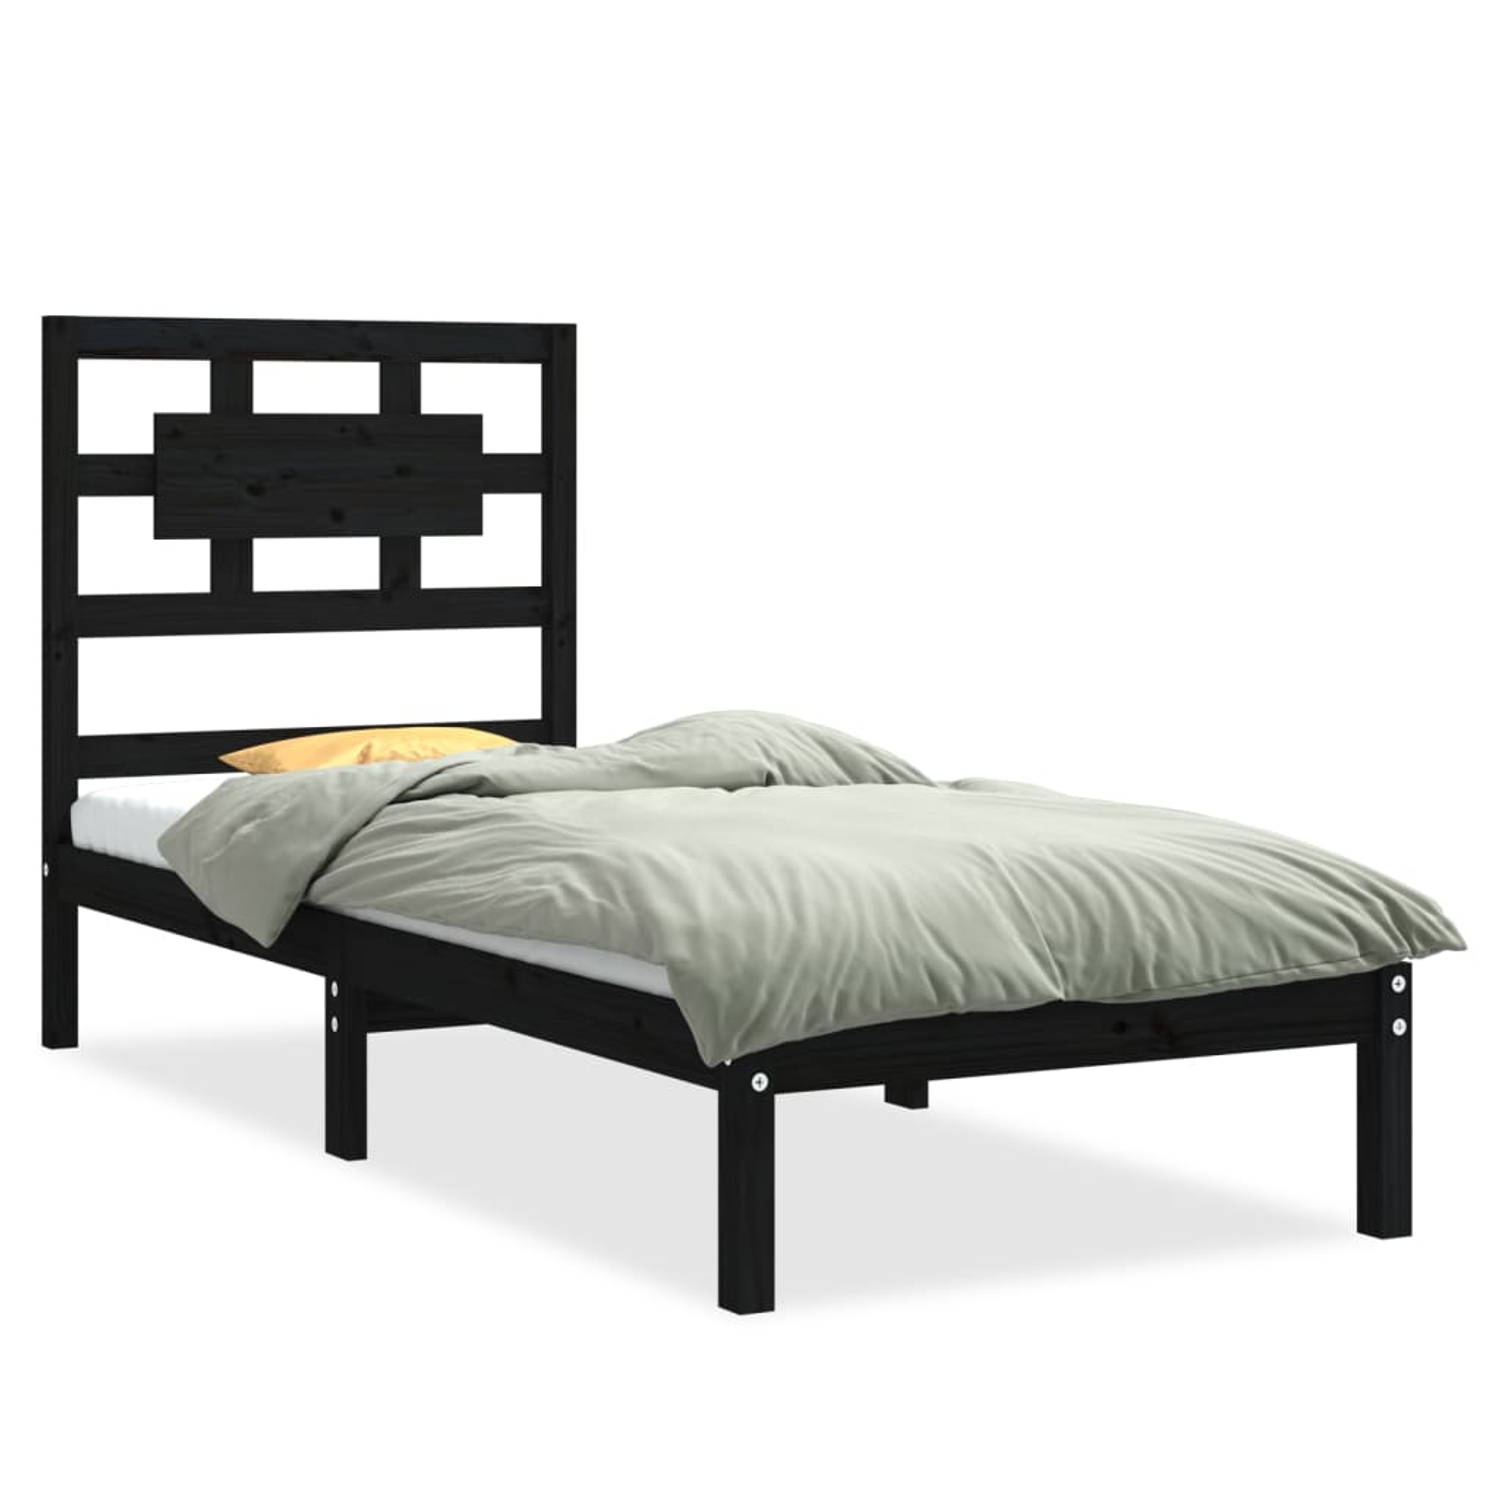 The Living Store Bedframe massief hout zwart 75x190 cm 2FT6 Small Single - Bedframe - Bedframes - Eenpersoonsbed - Bed - Bedombouw - Frame - Bed Frame - Ledikant - Bedframe Met Hoo